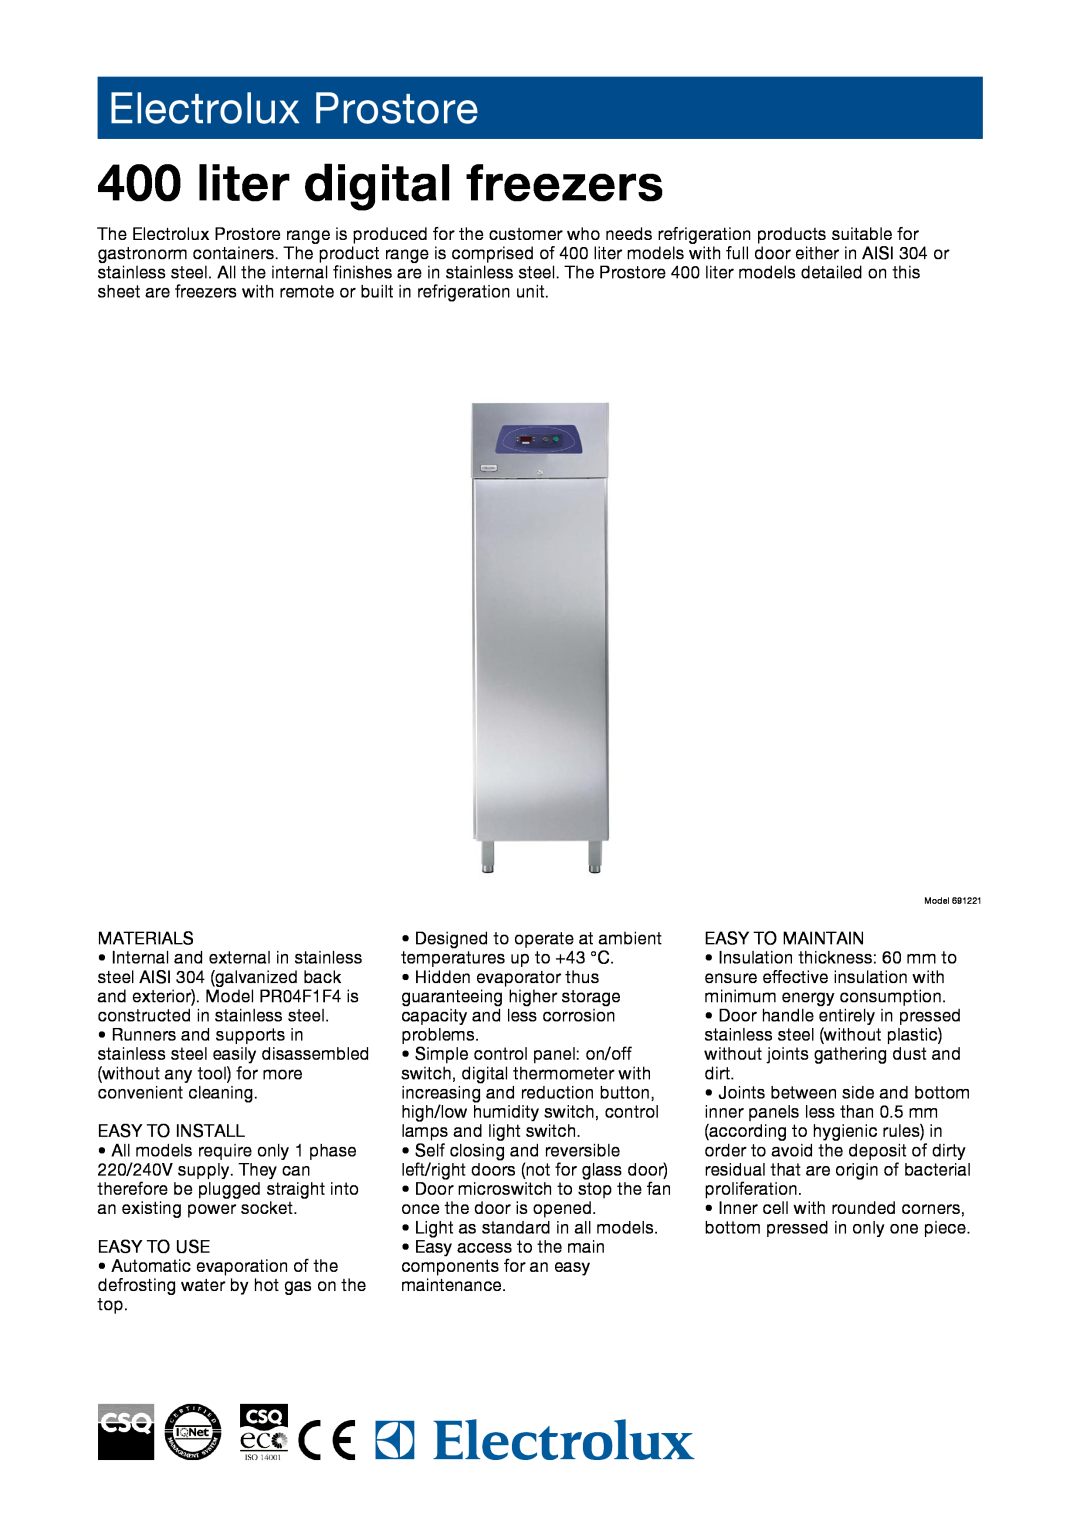 Electrolux PR04F1FR, 691222, 691221 manual liter digital freezers, Electrolux Prostore 